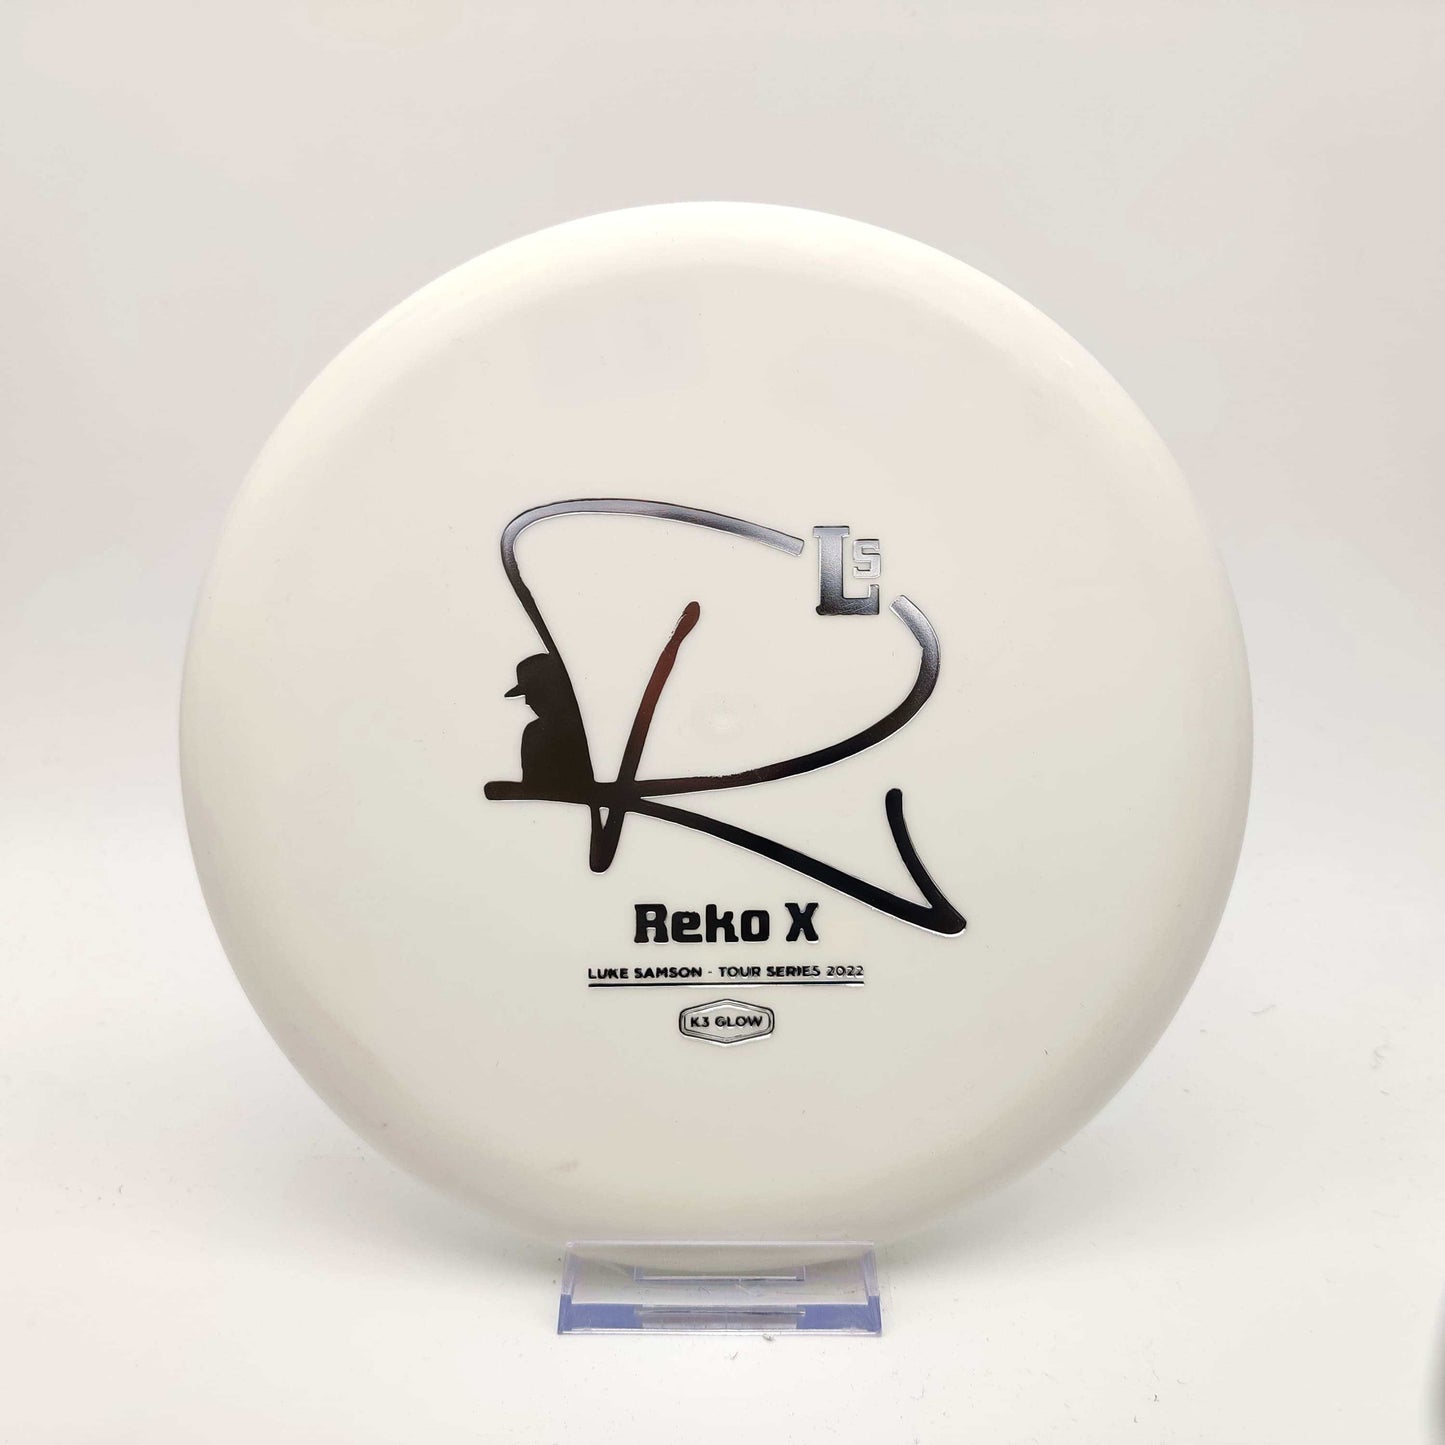 Kastaplast Tour Series Luke Samson K3 Glow Reko-X - Disc Golf Deals USA